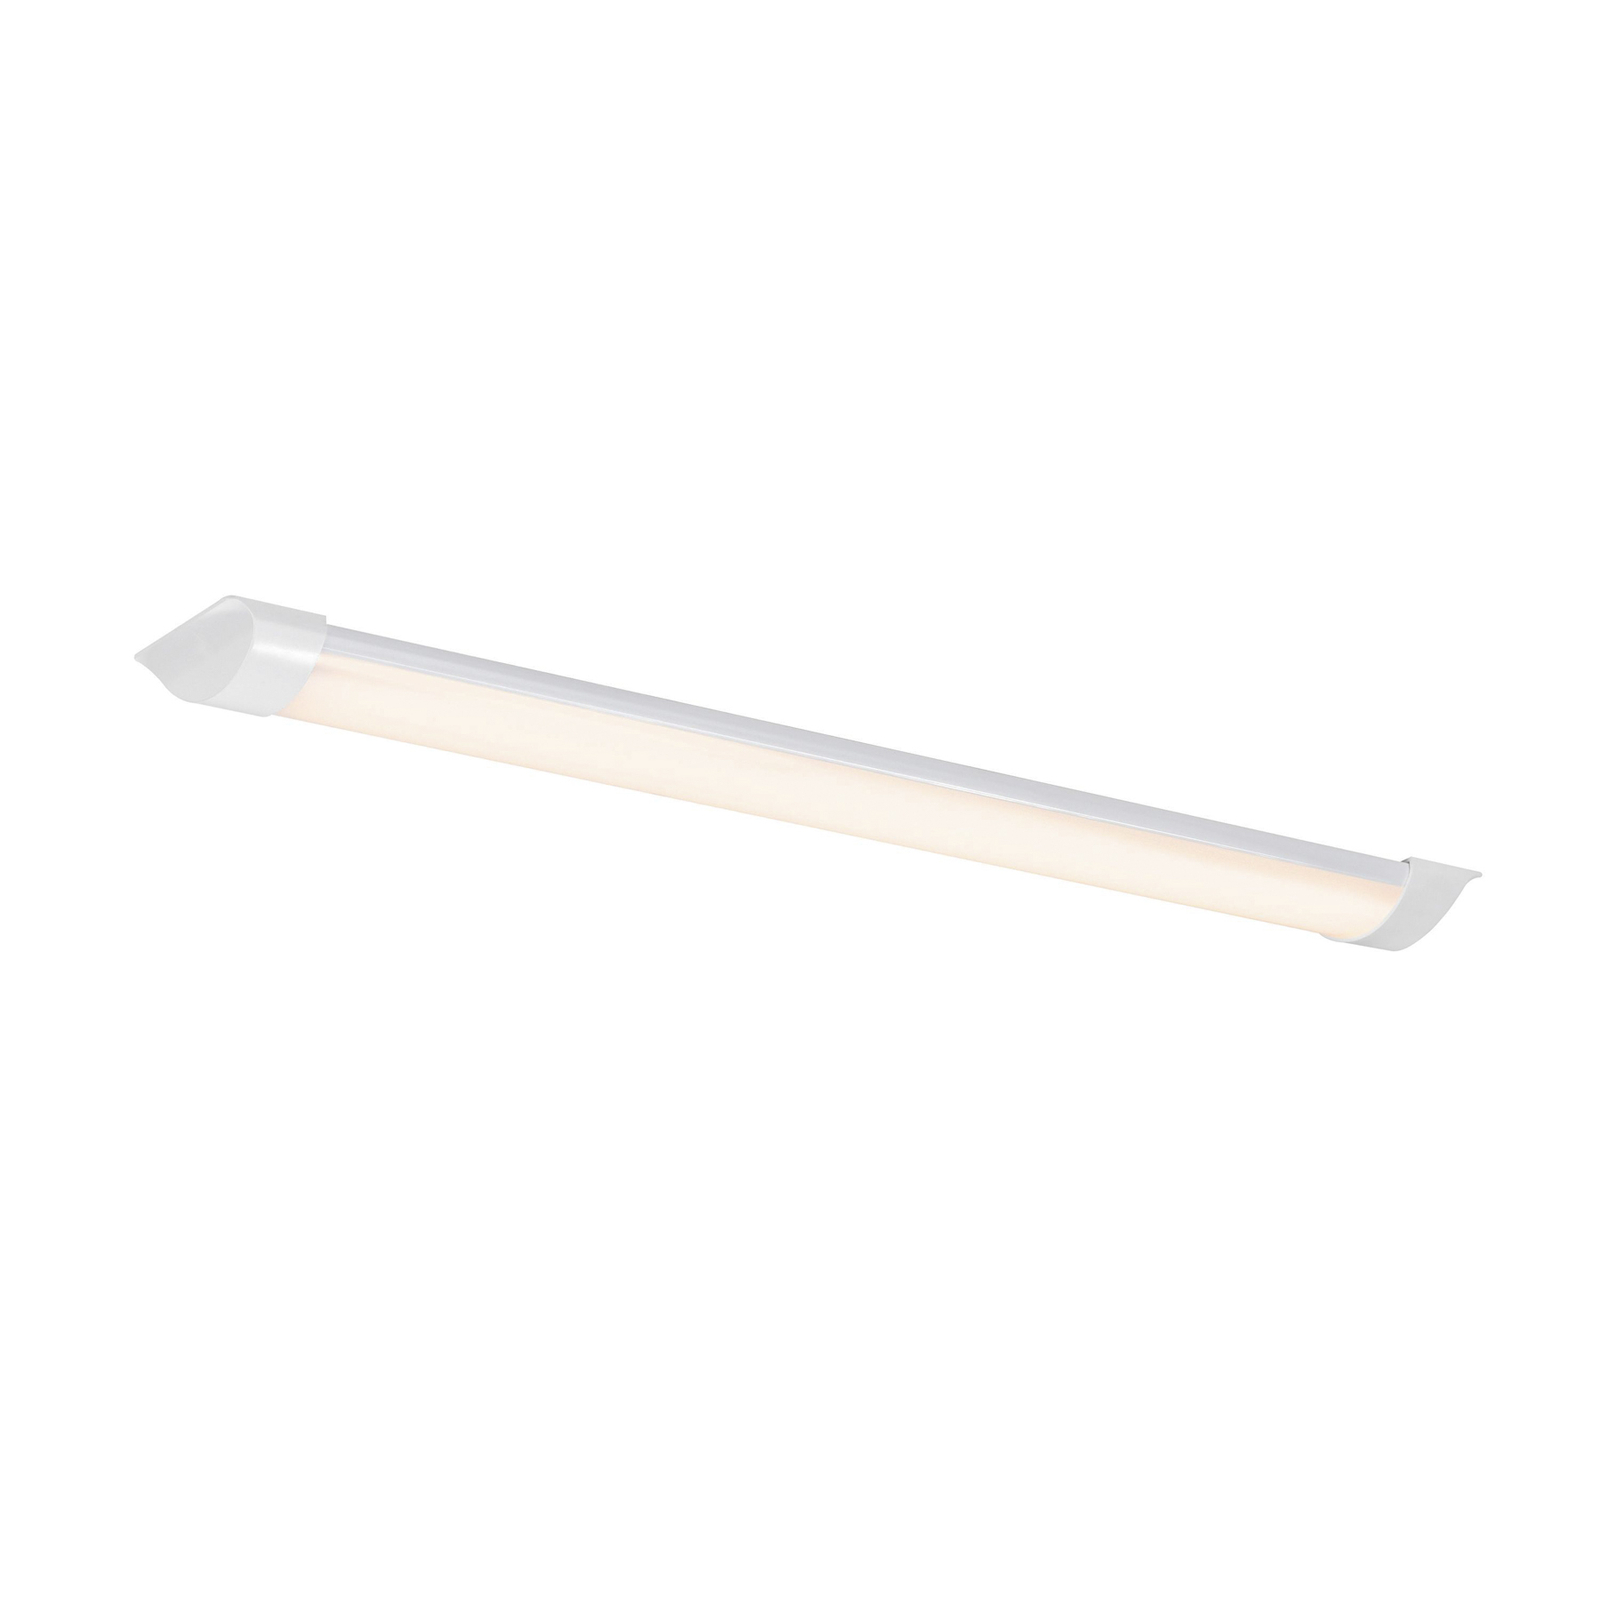 Tira de luz LED Glendale, 59 cm, IP20, plástico, blanco